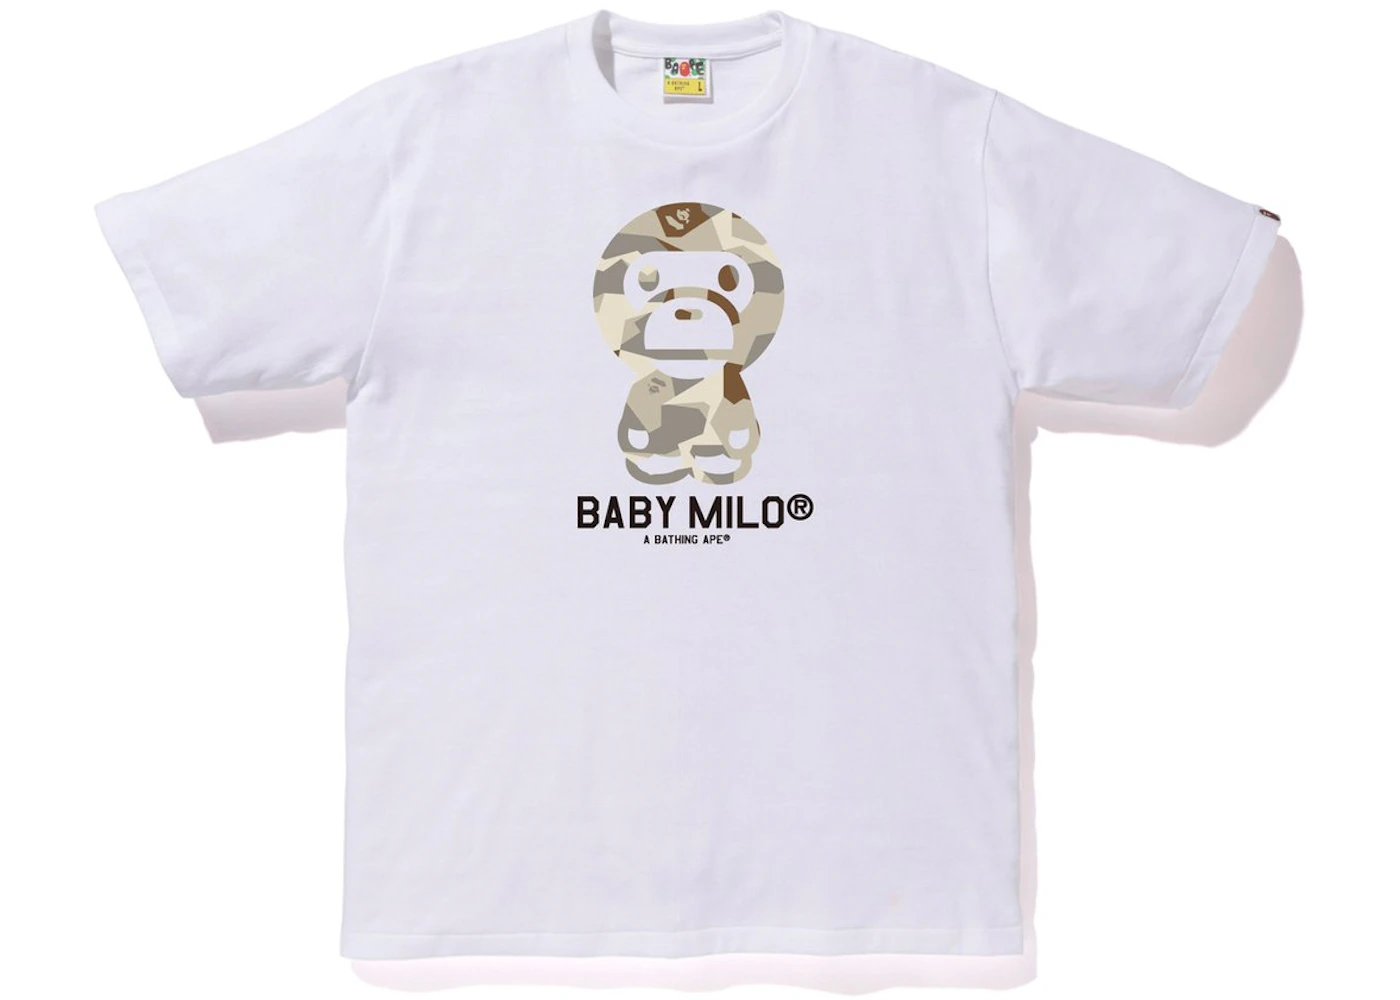 BAPE Splinter Camo Baby Milo Tee White/Beige Men's - SS18 - US